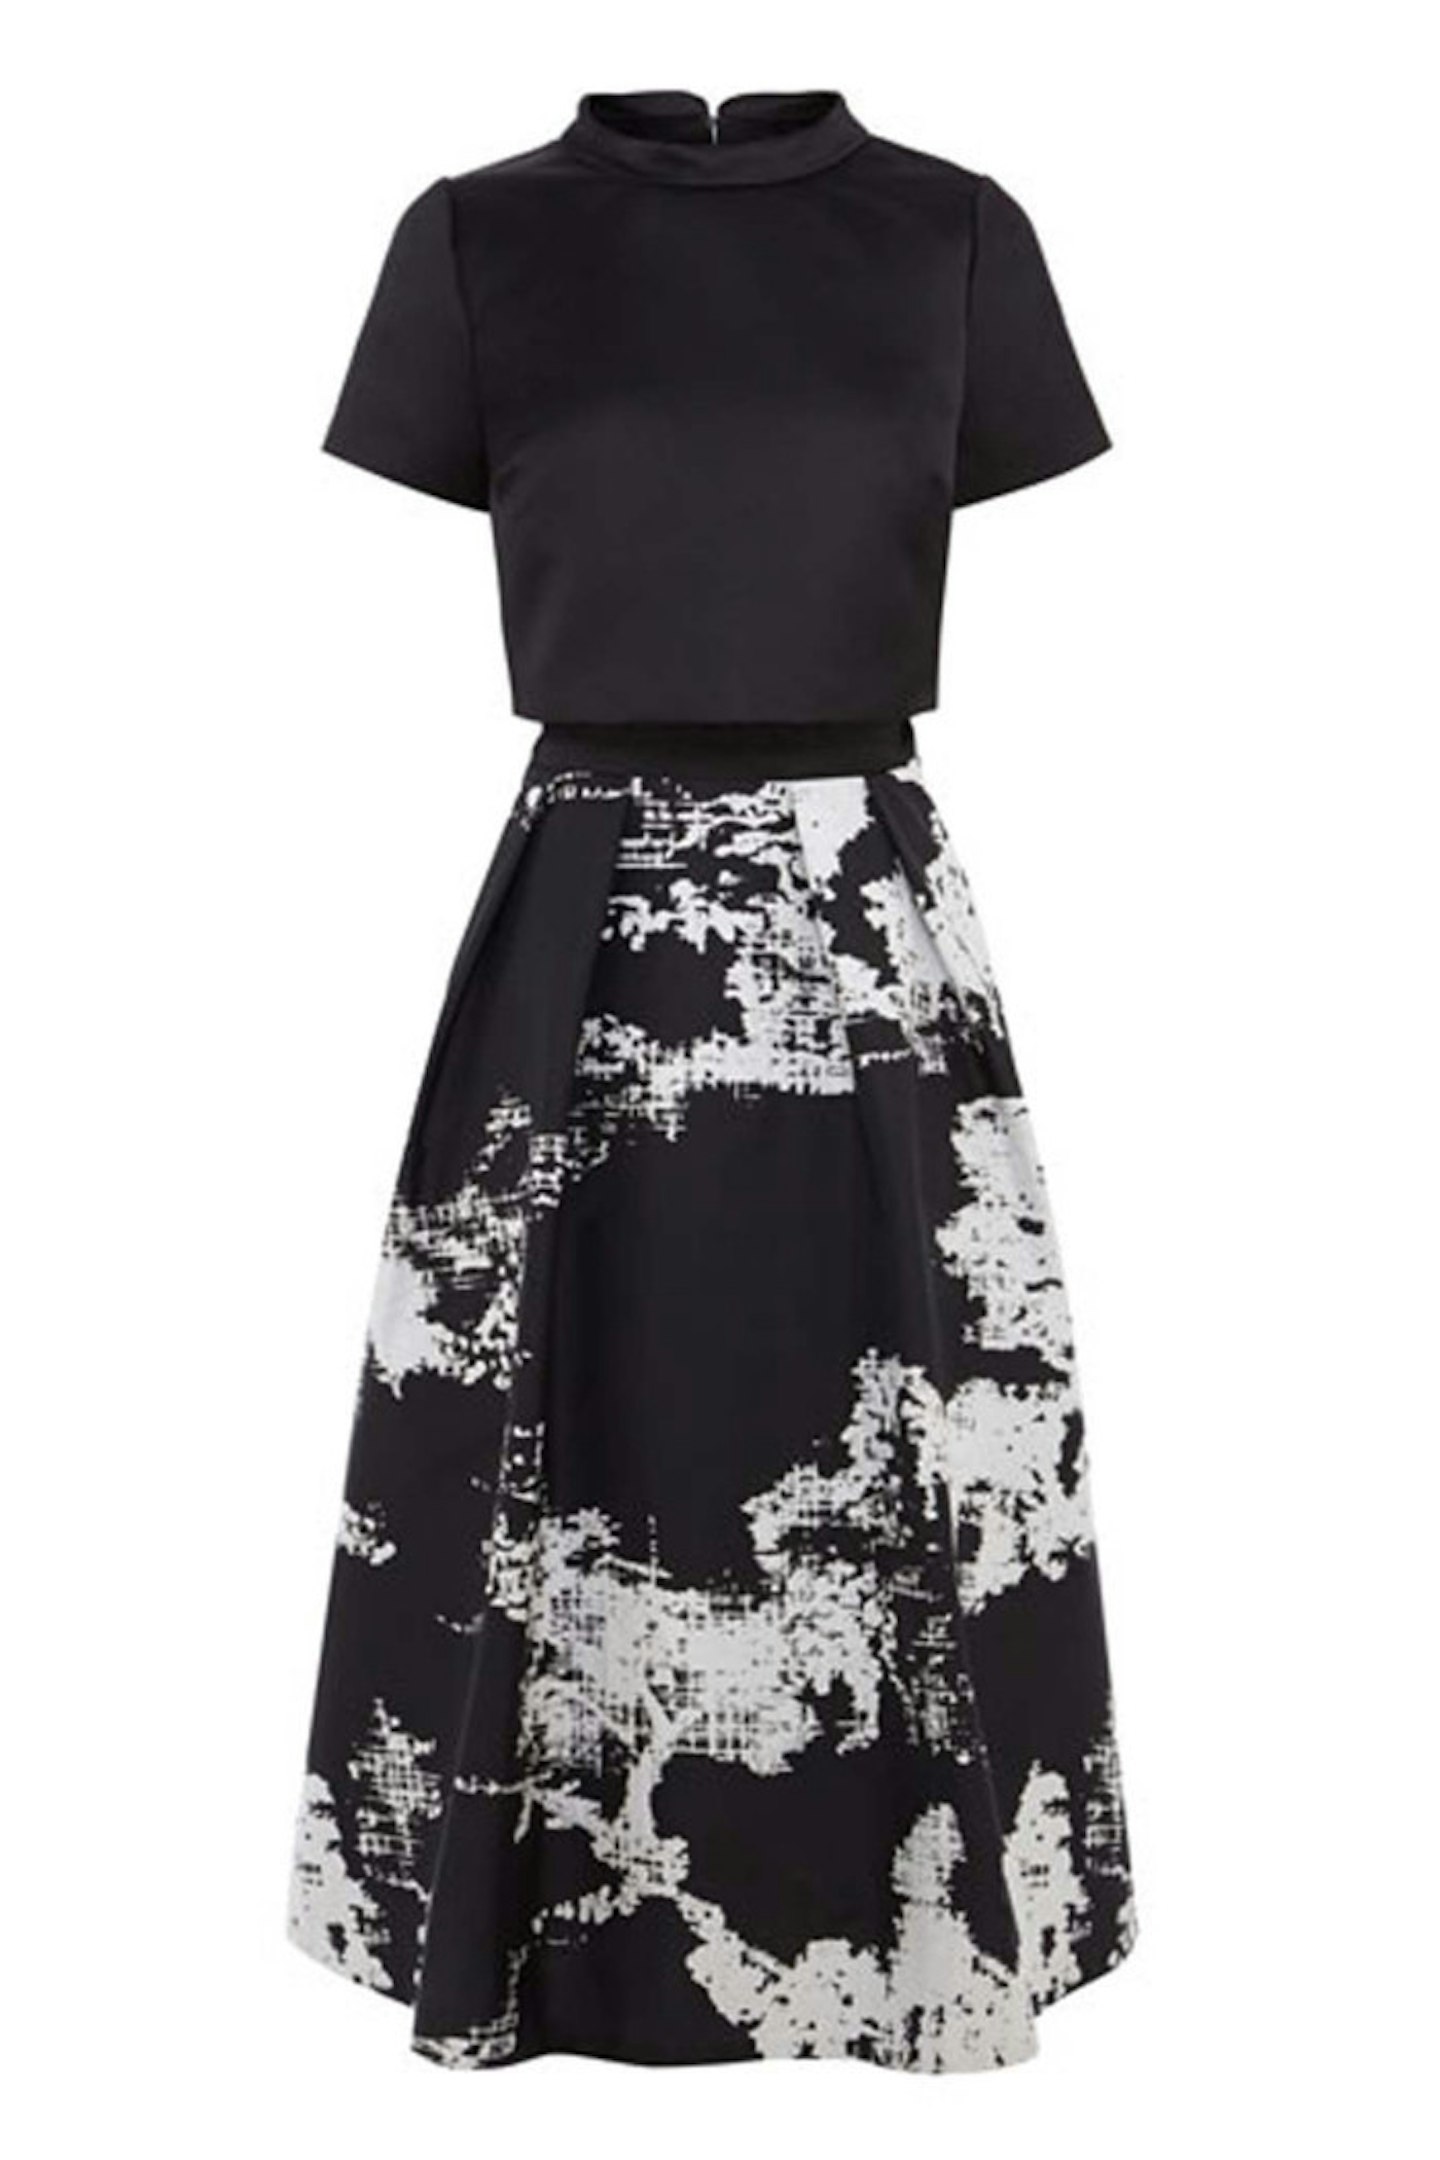 Dress, £195, Coast